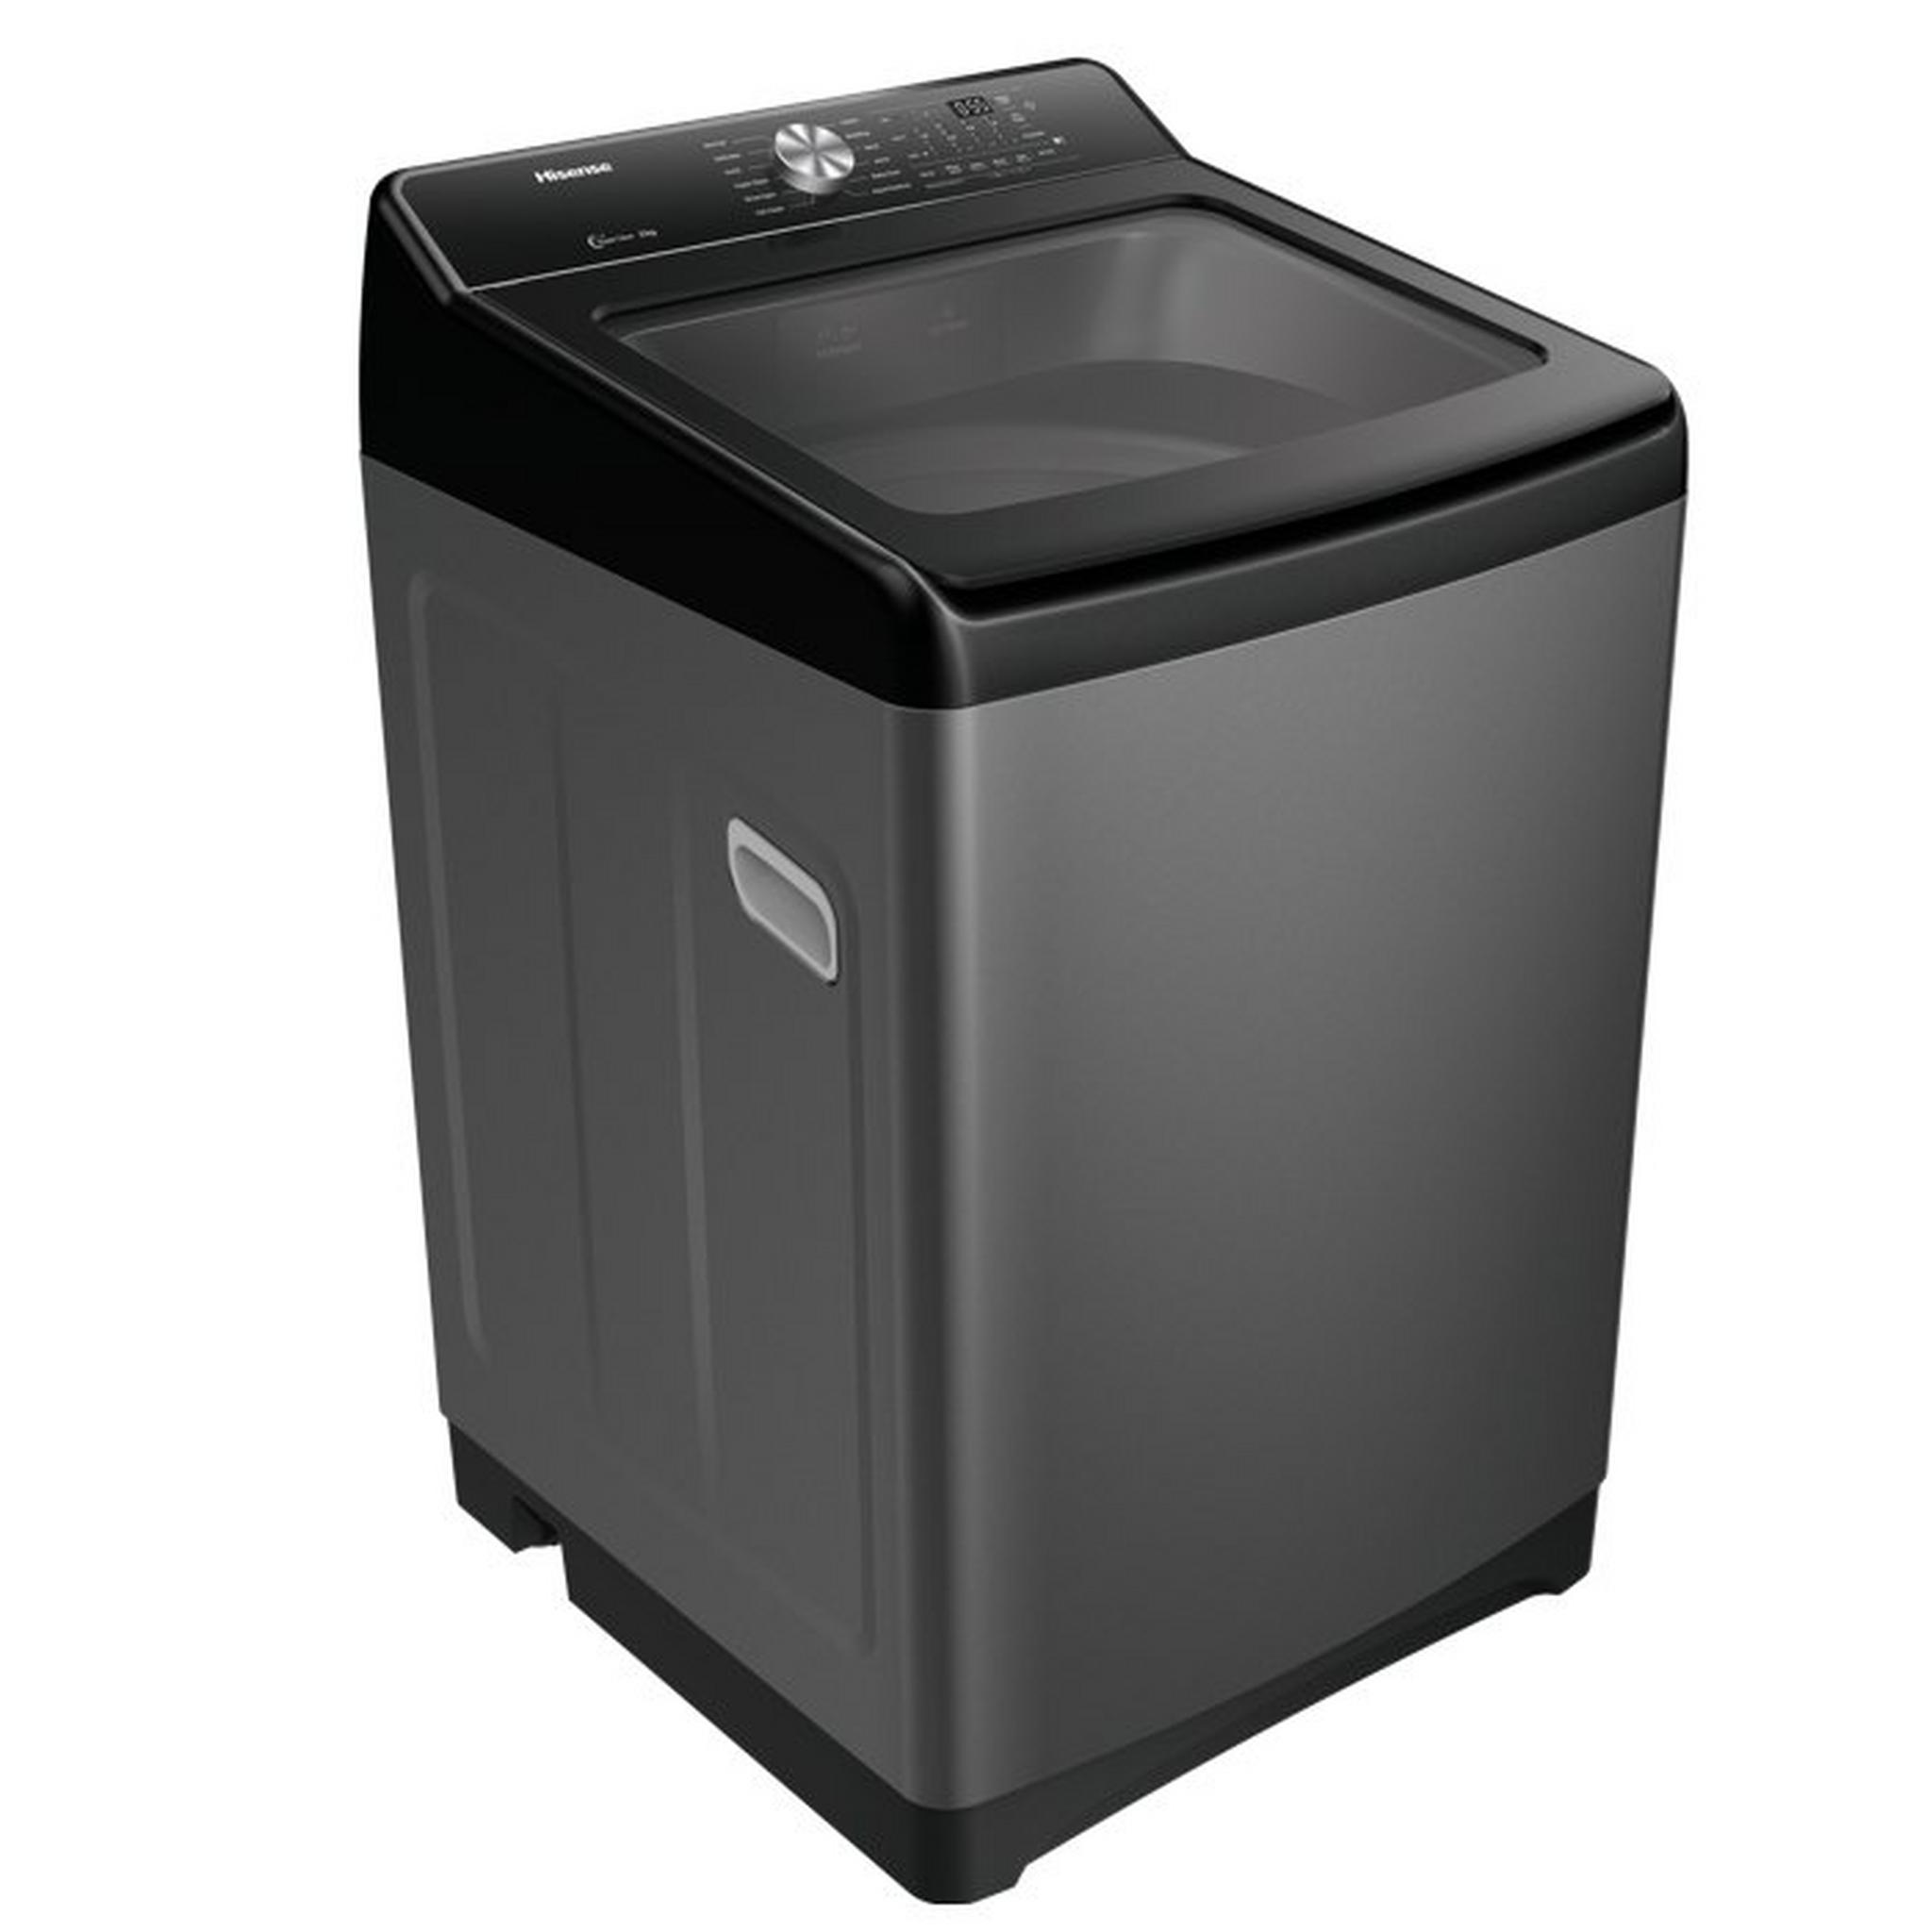 Hisense 20kg Top Load Washing Machine, 12 Programs, WT3T2023UT – Grey